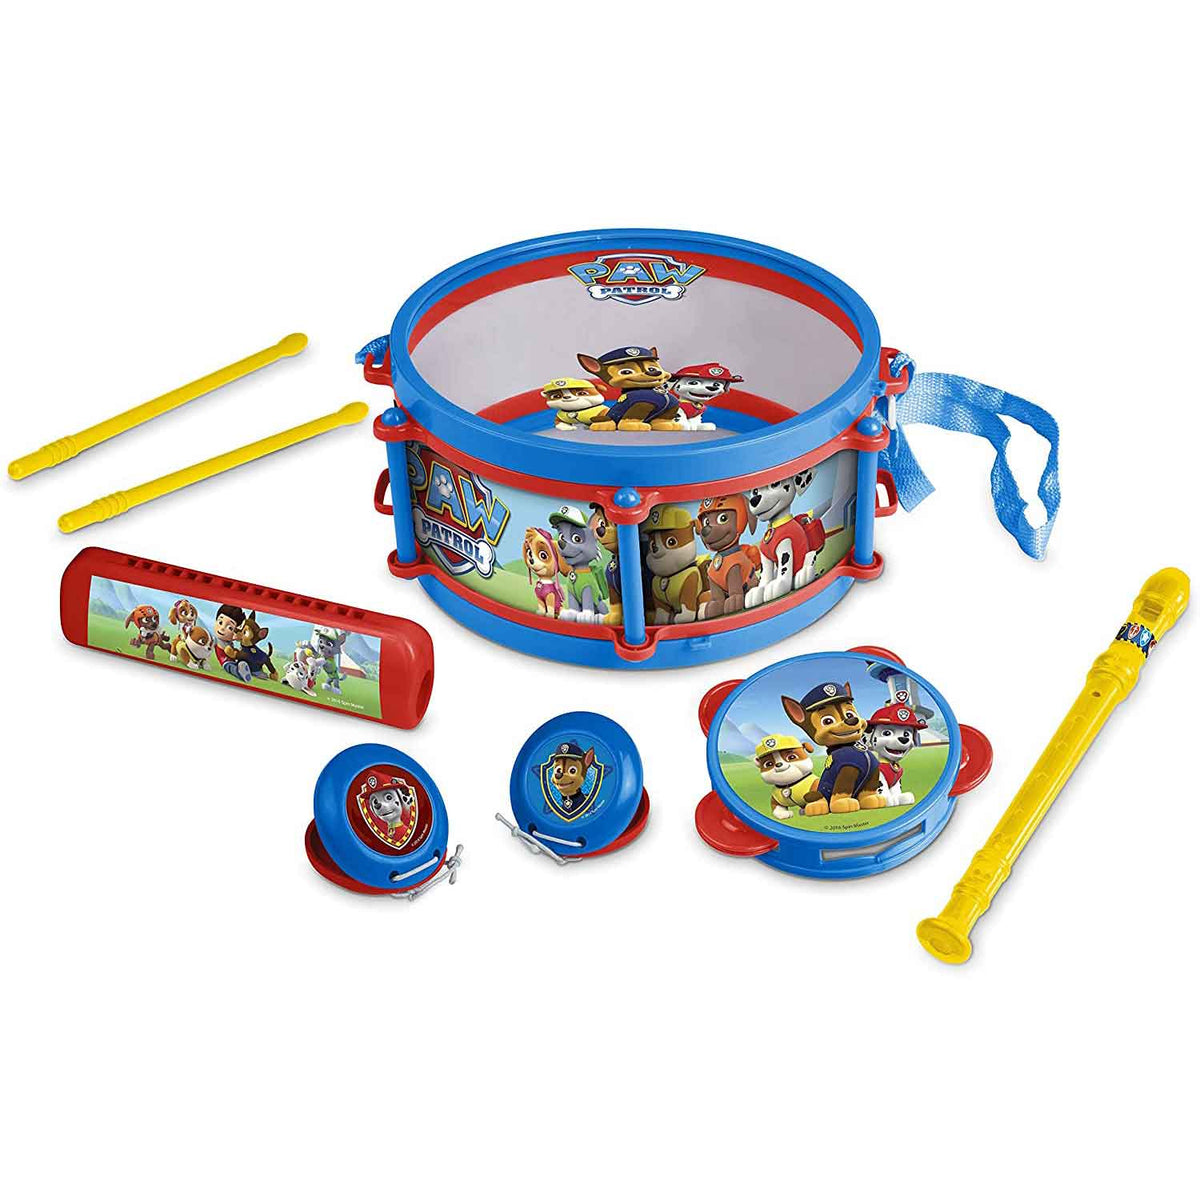 Paw Patrol Toy Drum Set